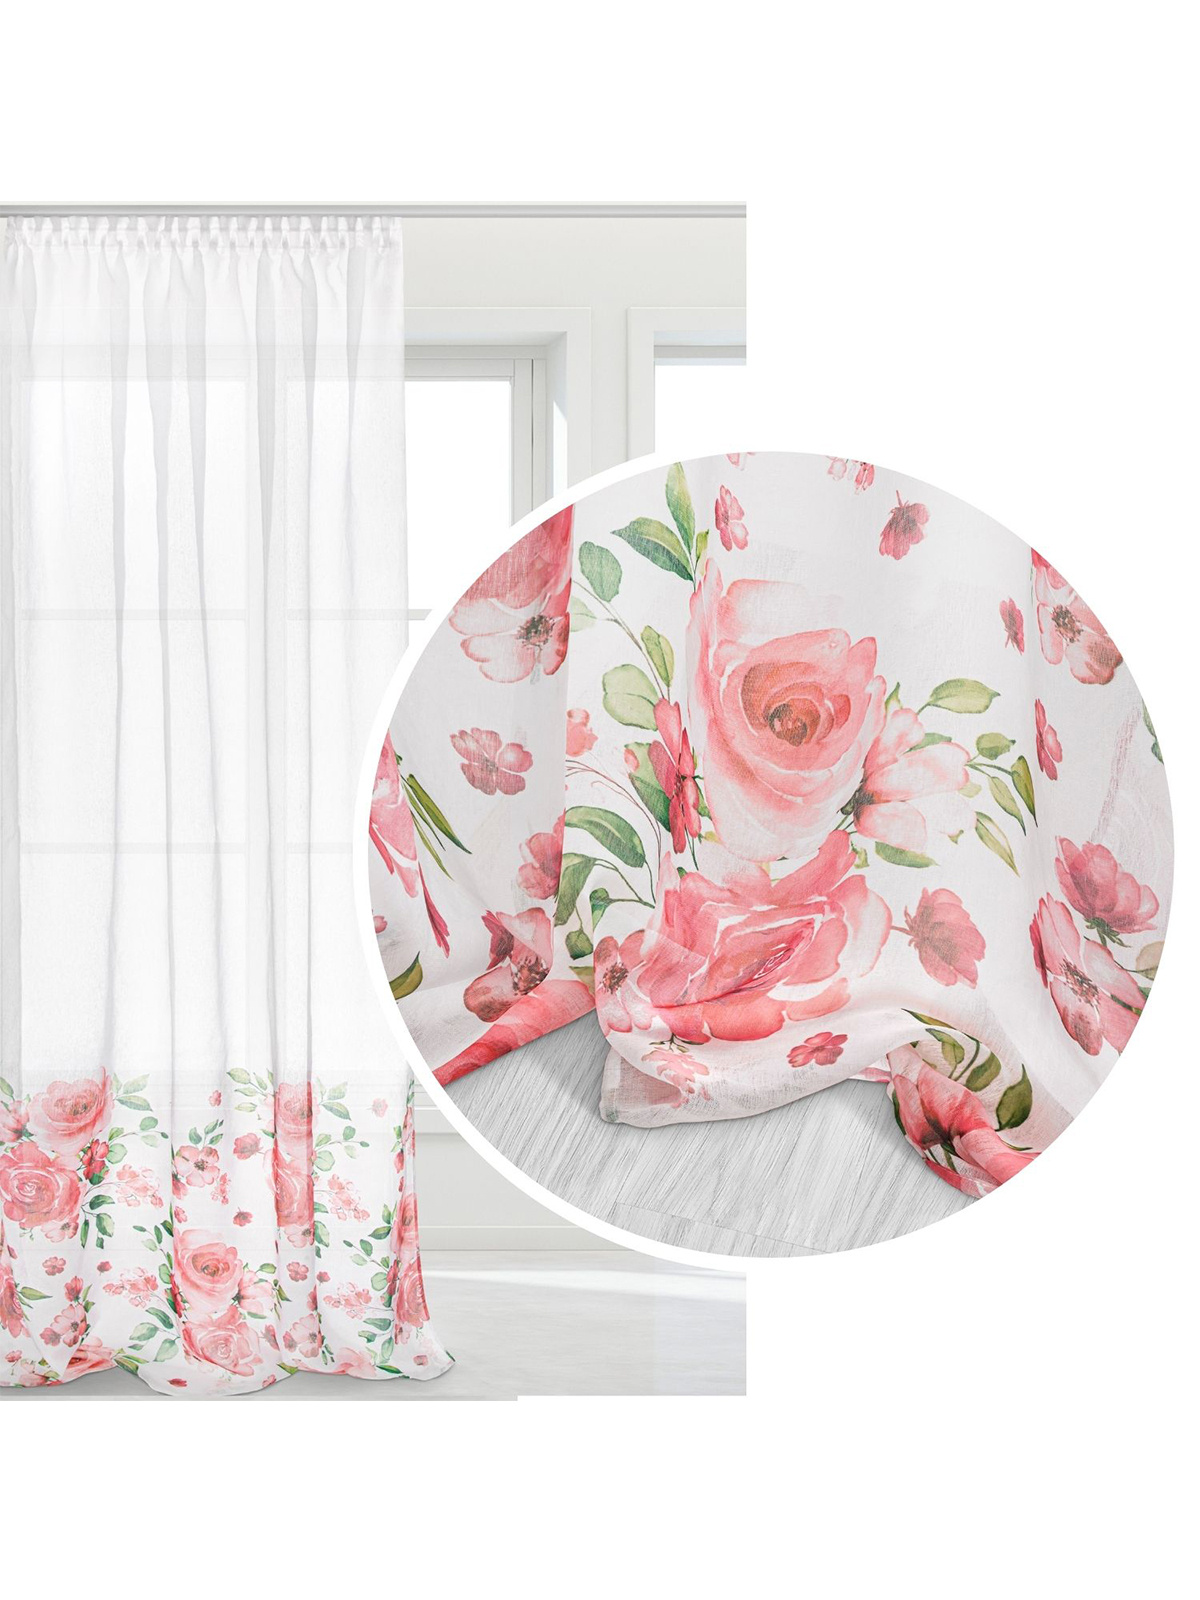 Edoti Curtain With Roses Rosally 140x250 A491